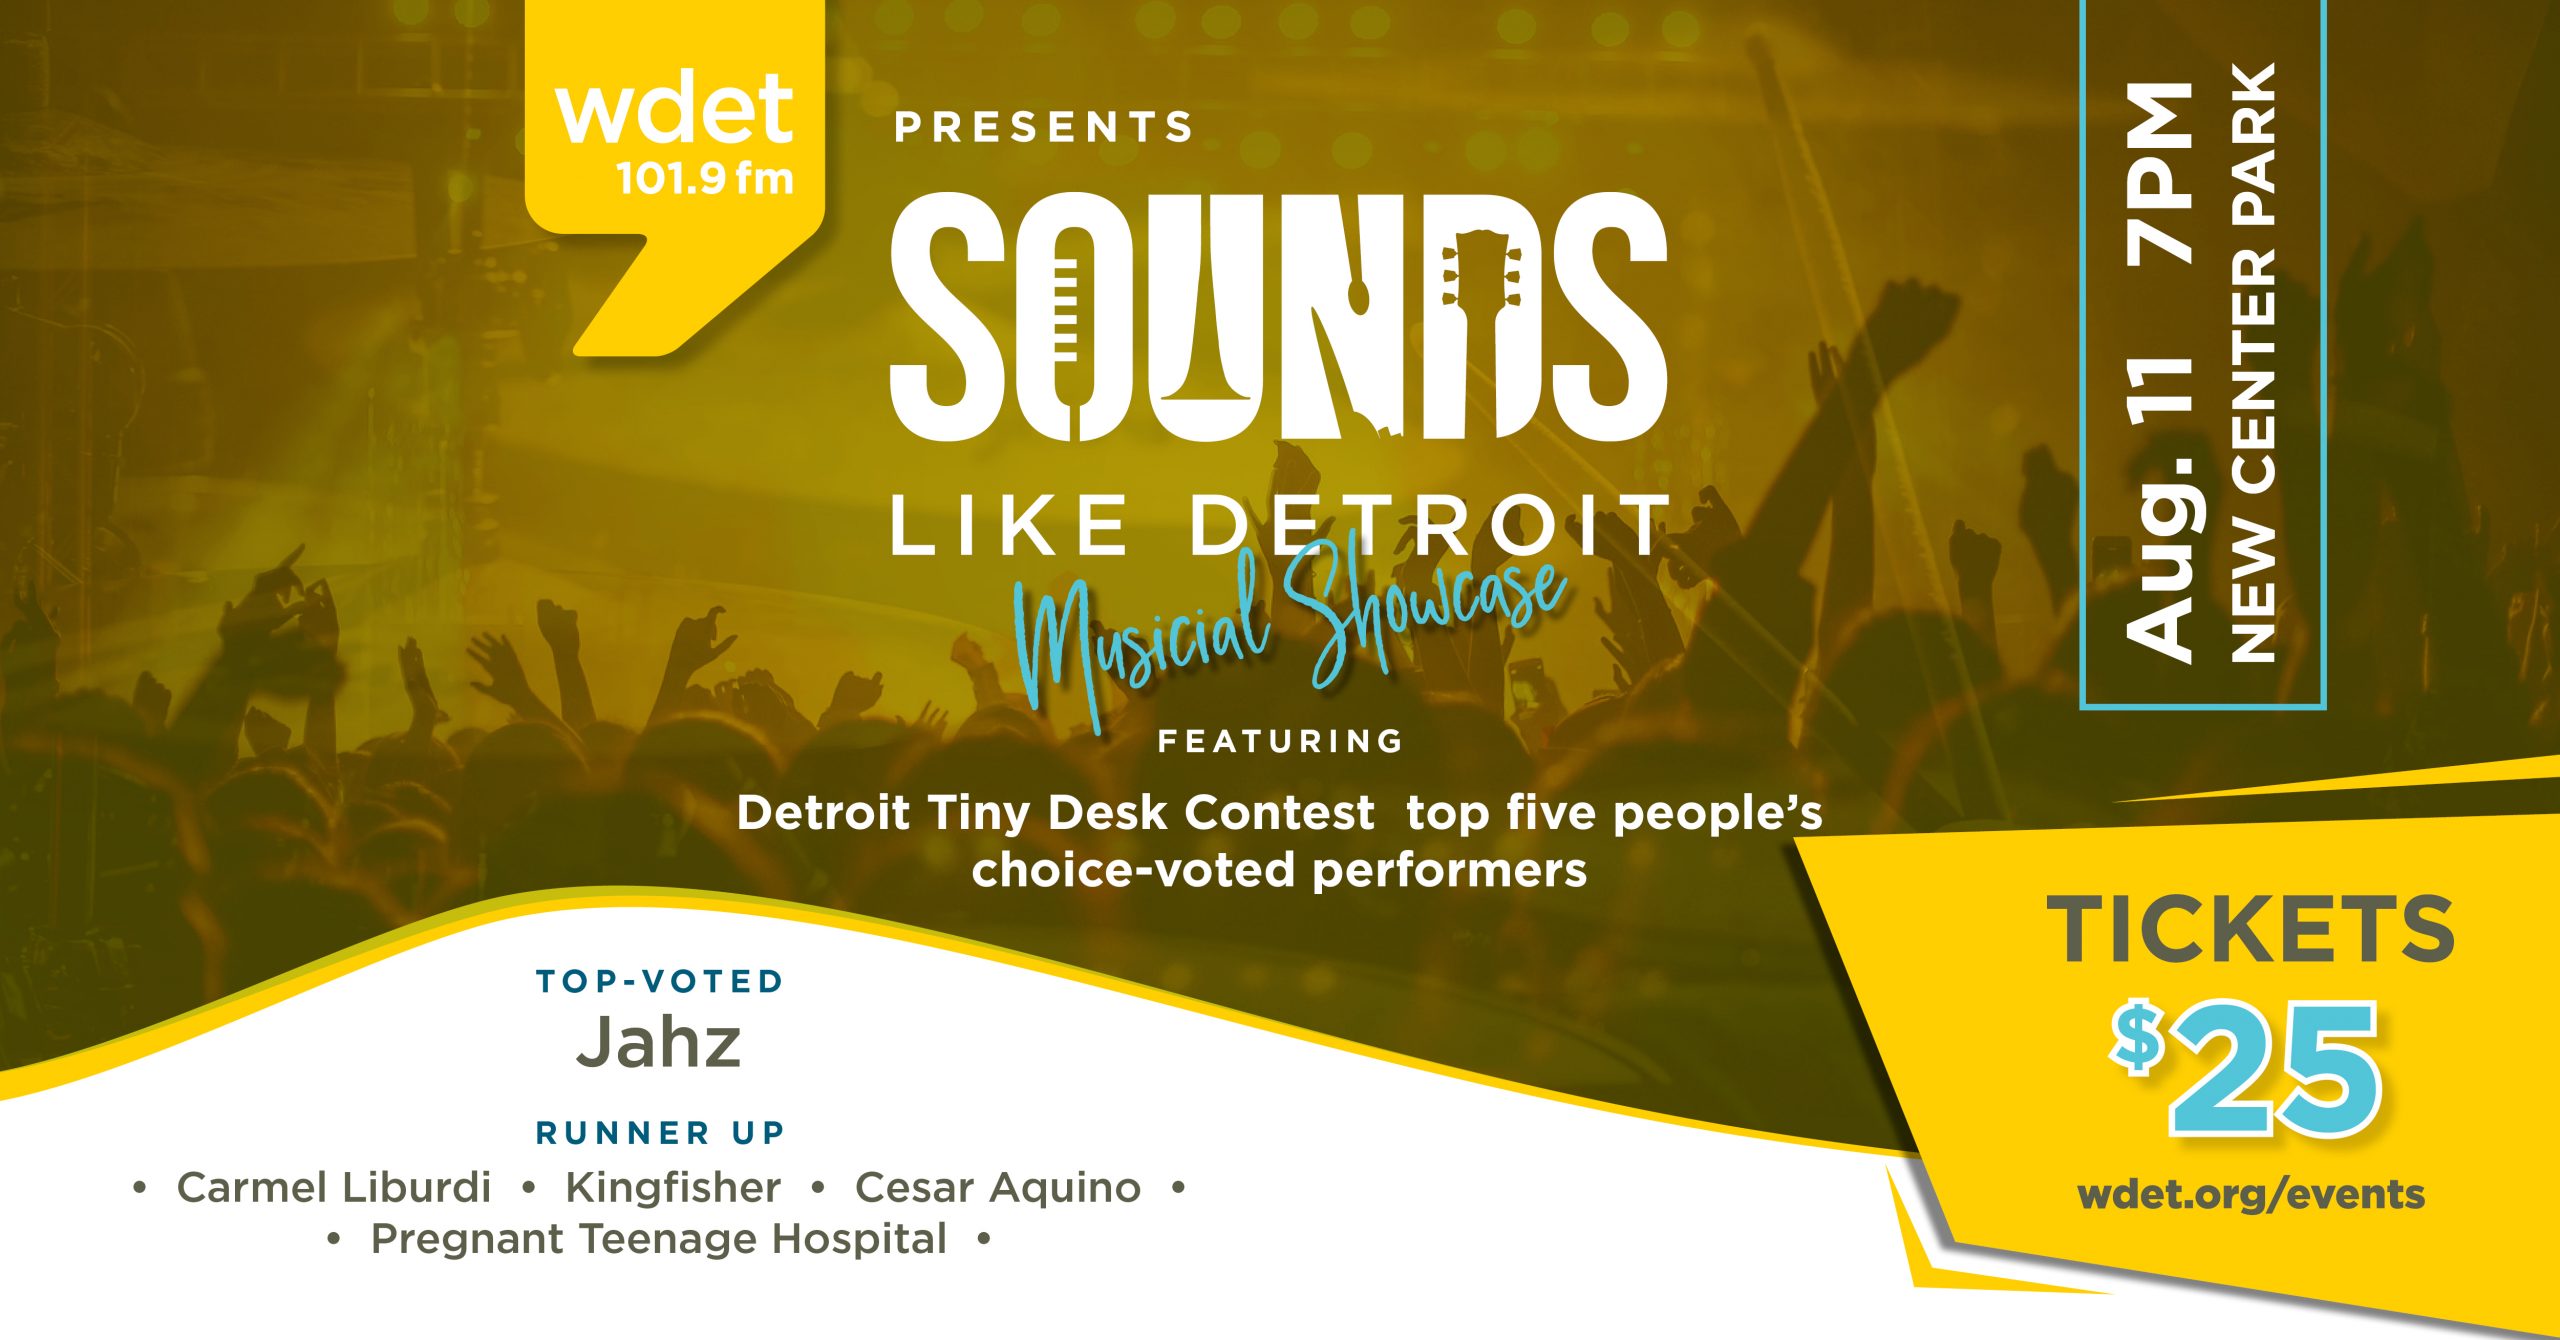 WDET presents "Sounds Like Detroit" Musical Showcase